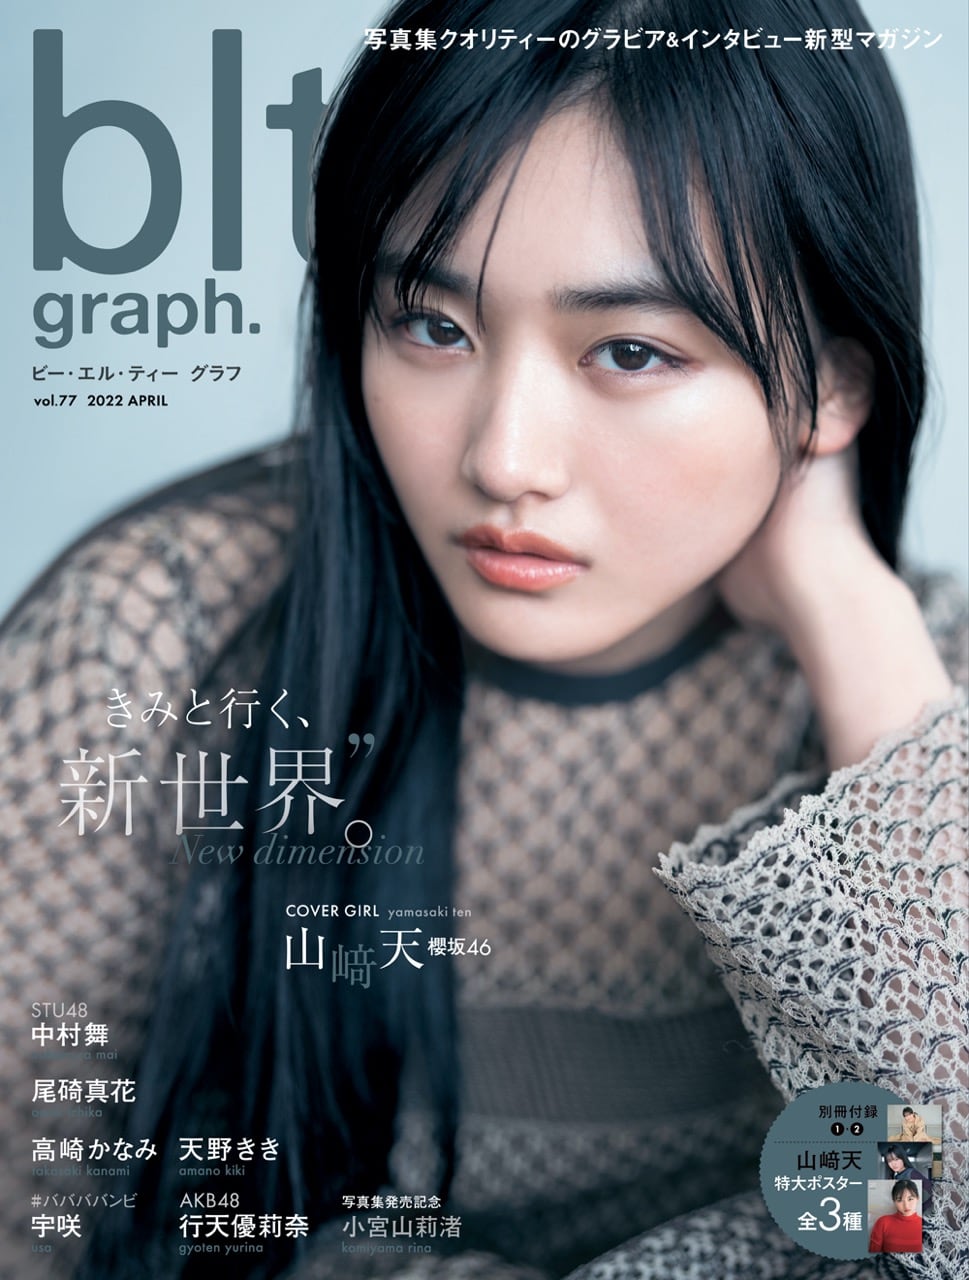 STU48 中村舞、AKB48 行天優莉奈、グラビア掲載！「blt graph. vol.77」本日4/4発売！